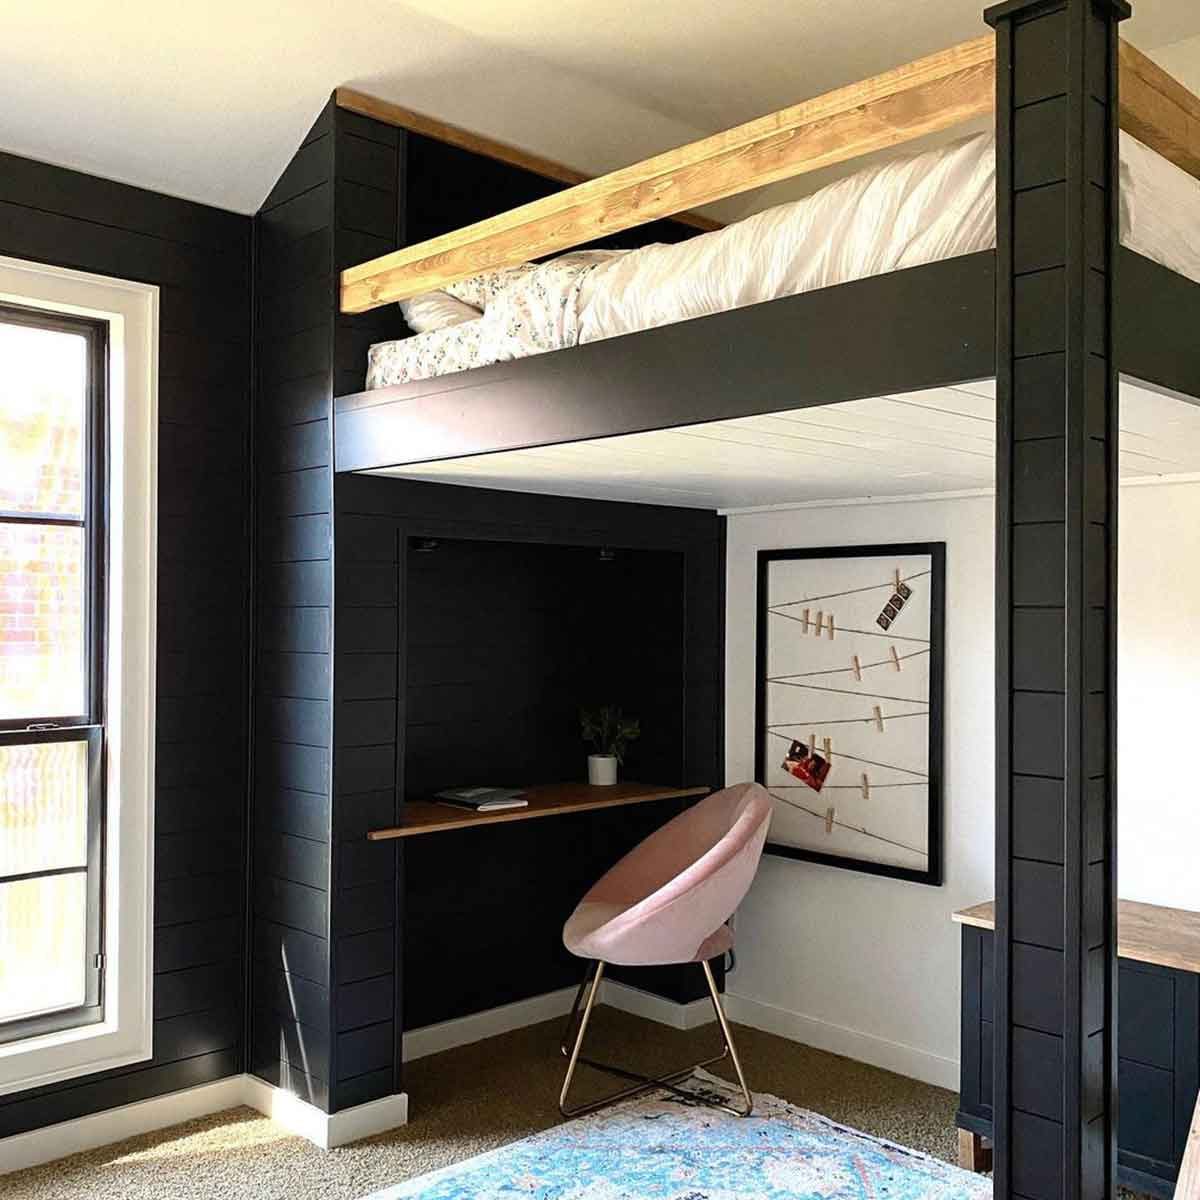 Cabin Bunk Bed: 10 Stylish Ideas | The Family Handyman